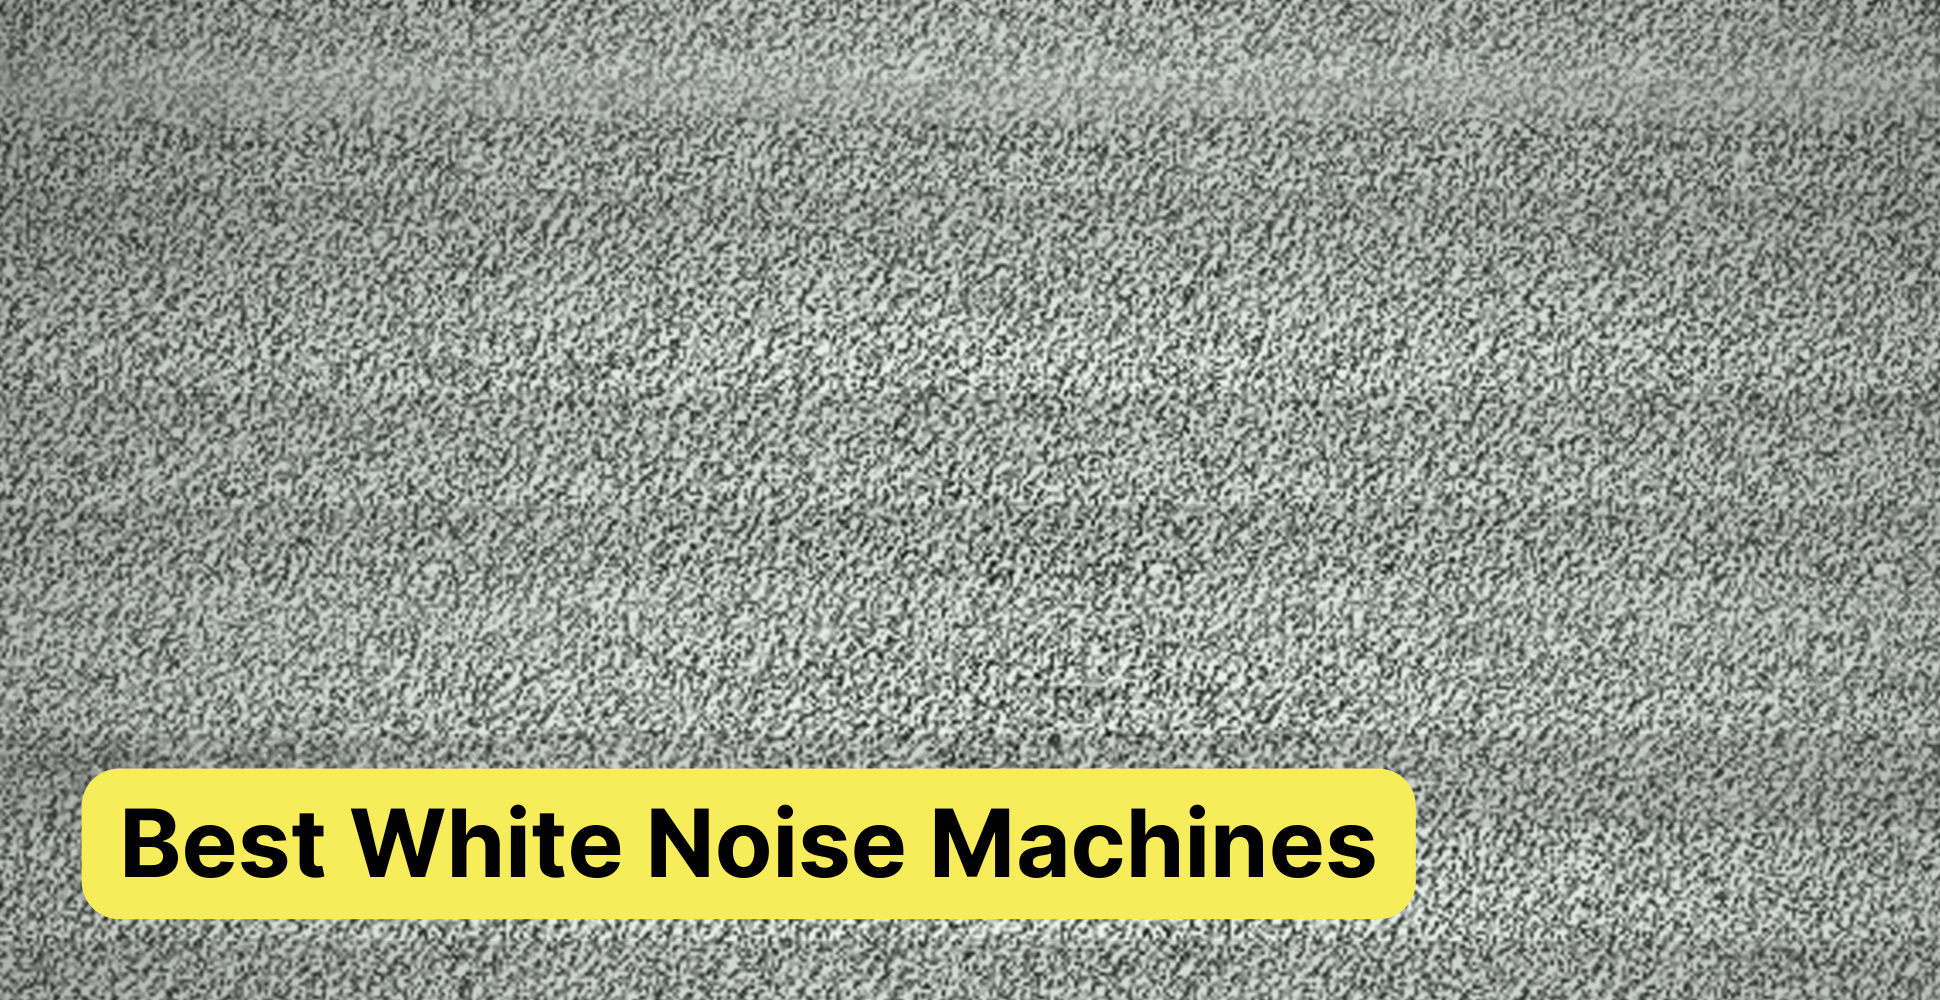 Best White Noise Machines